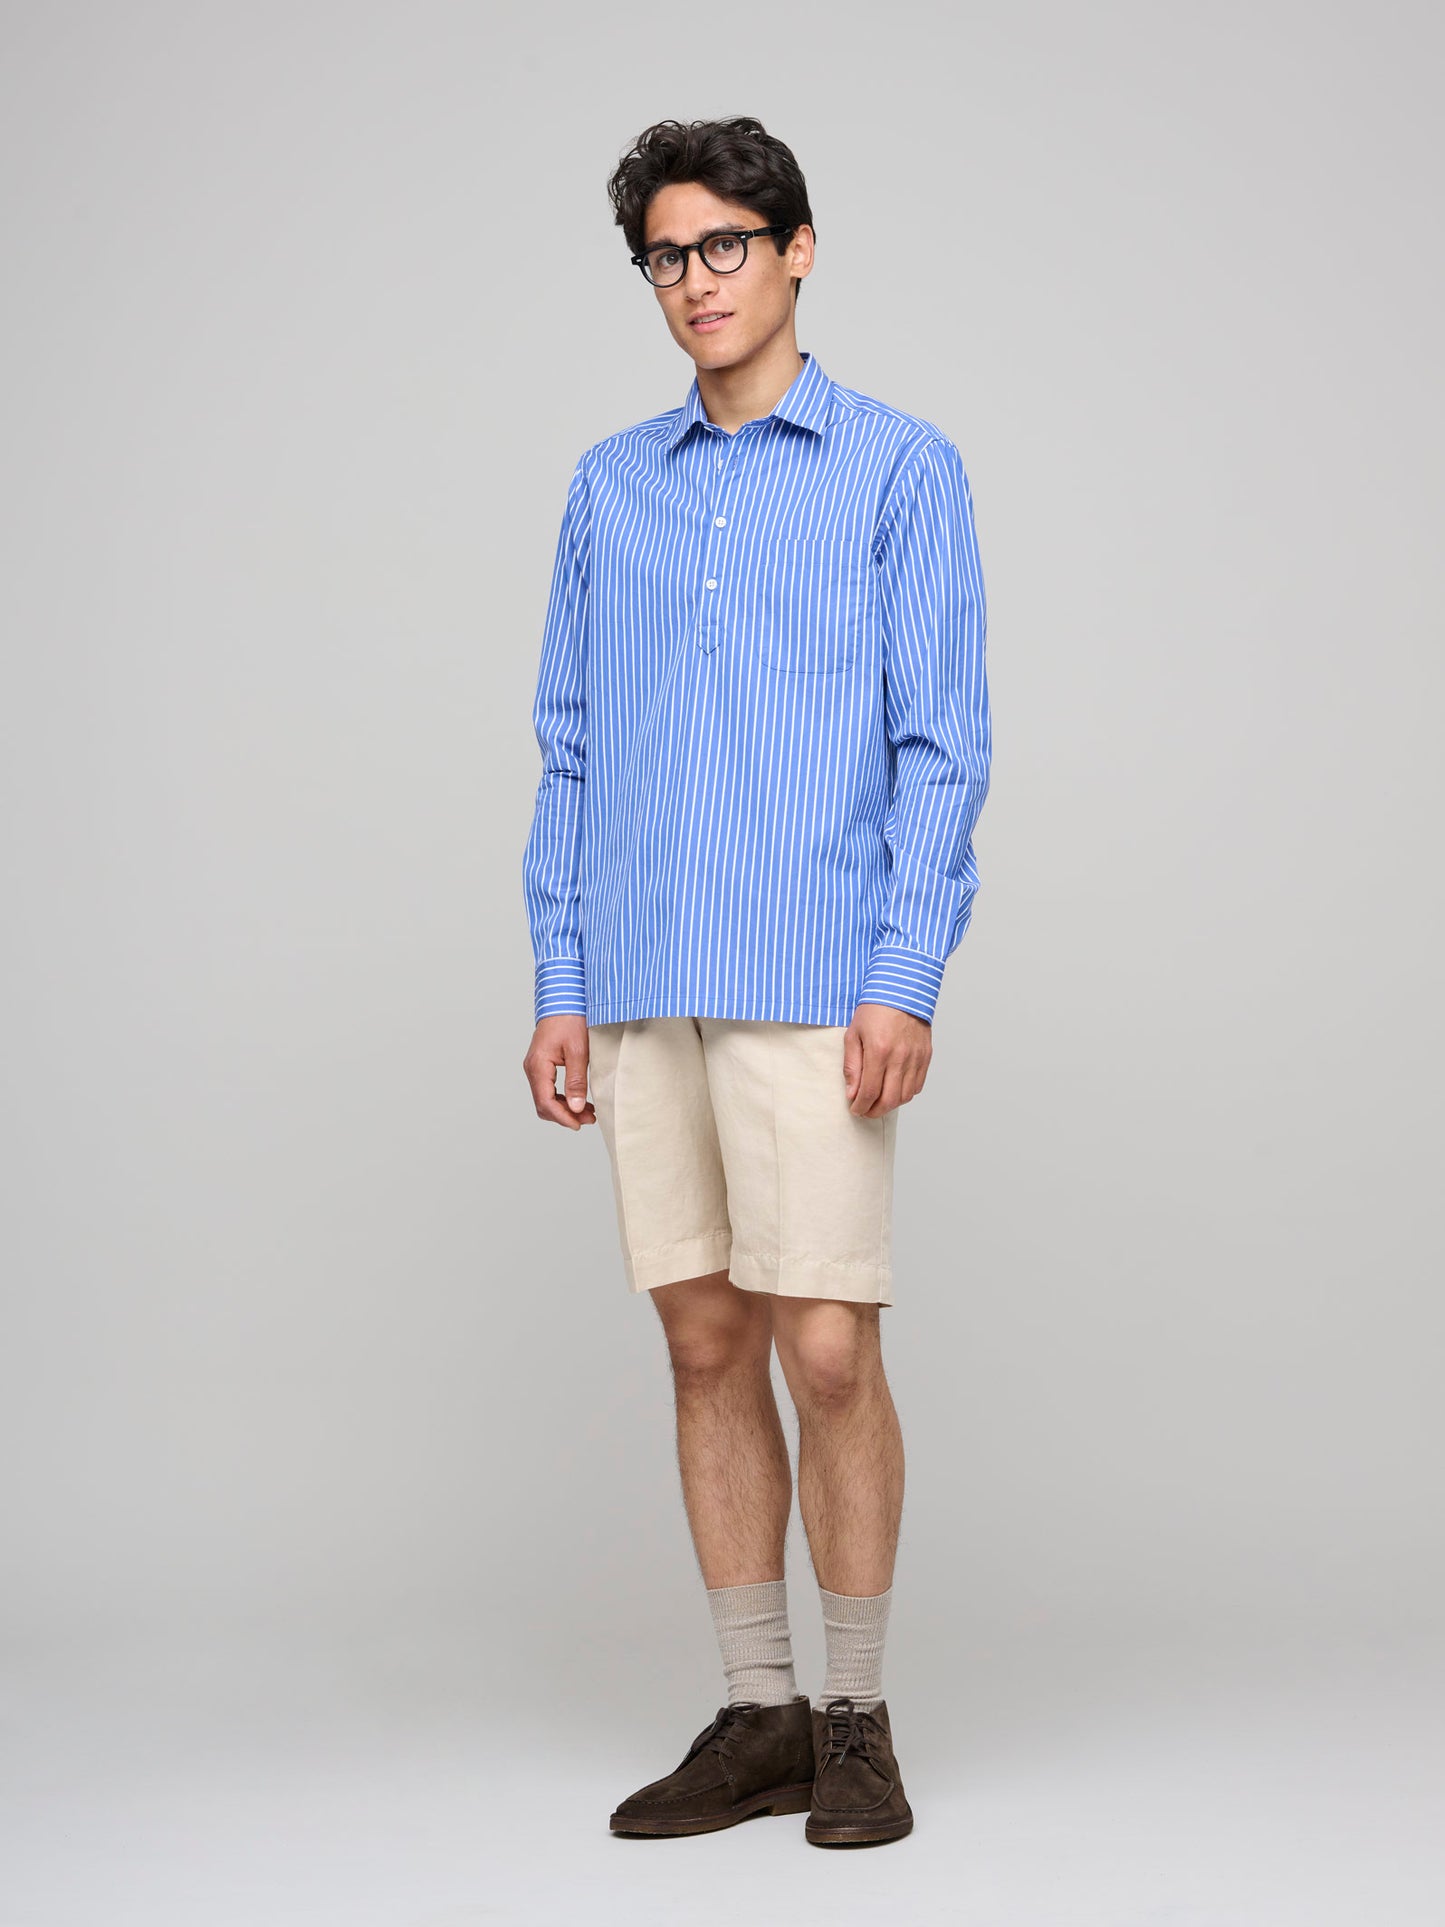 Popover Shirt, Royal Blue / White Stripe